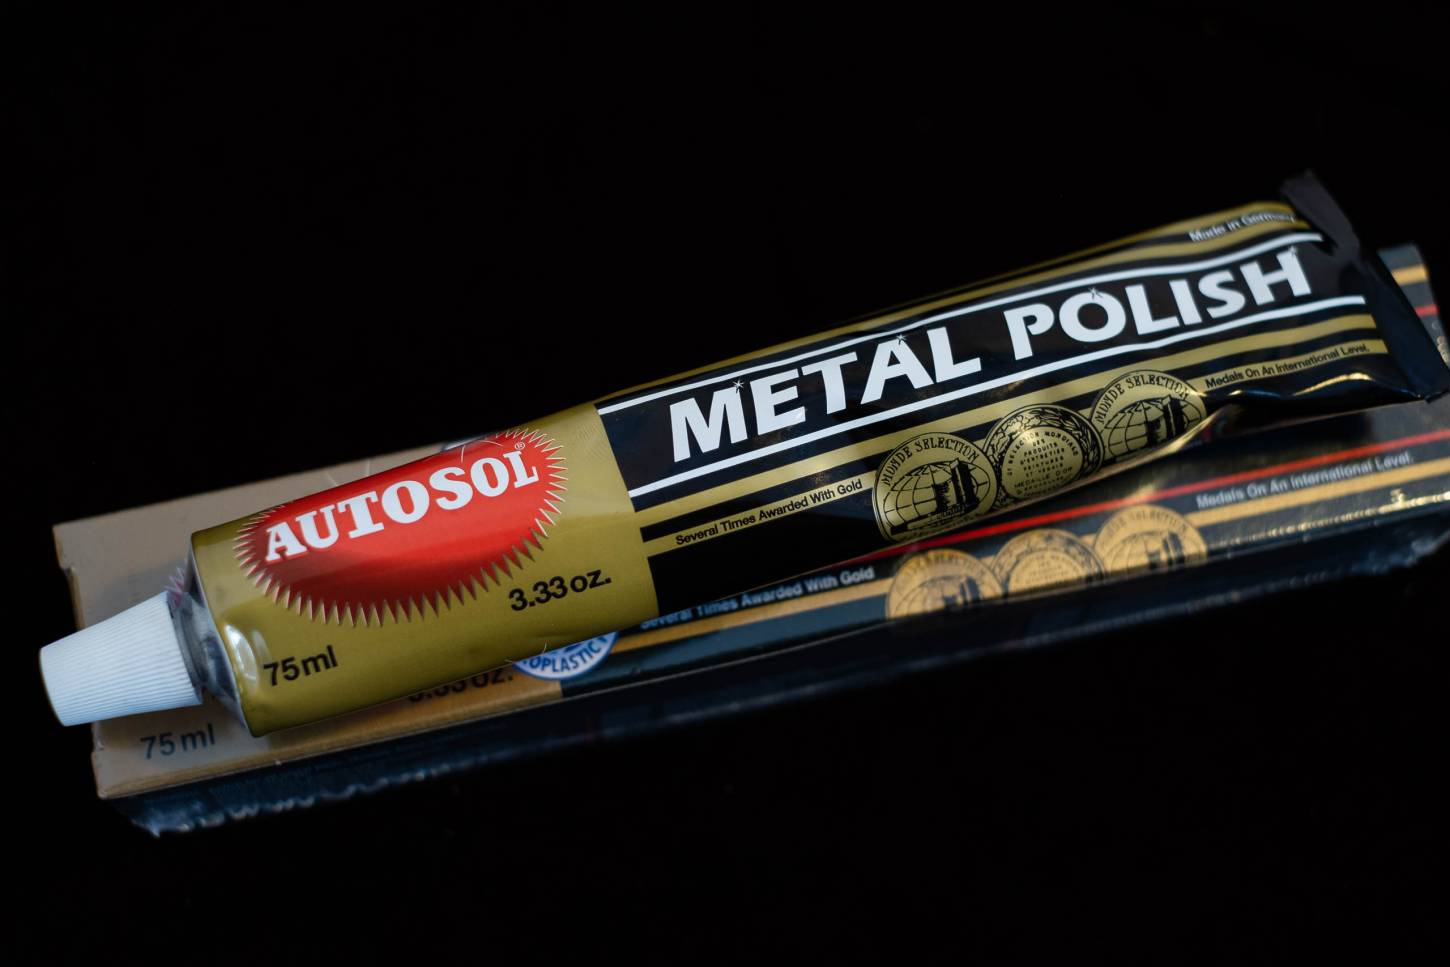 Autosol Metal Polish Polierpaste 75ml